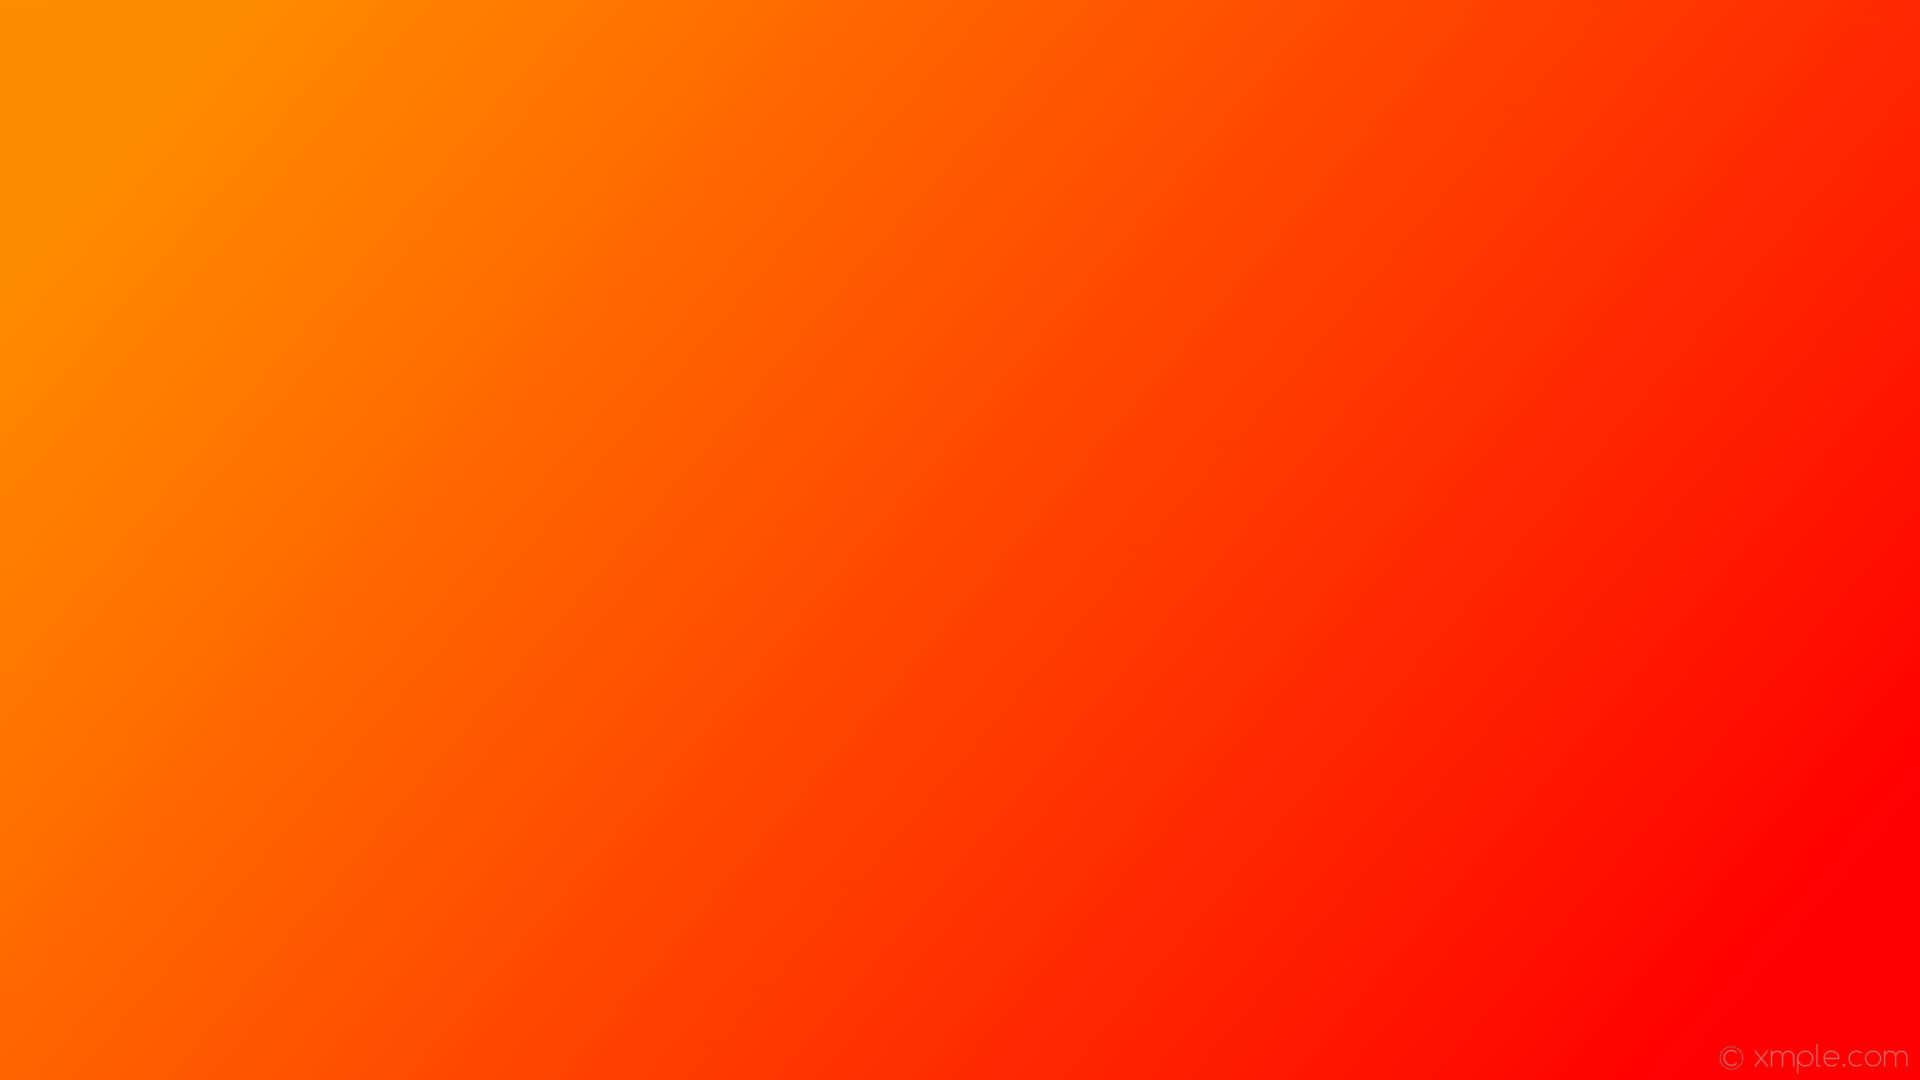 Bright and Colorful Plain Orange Wallpaper